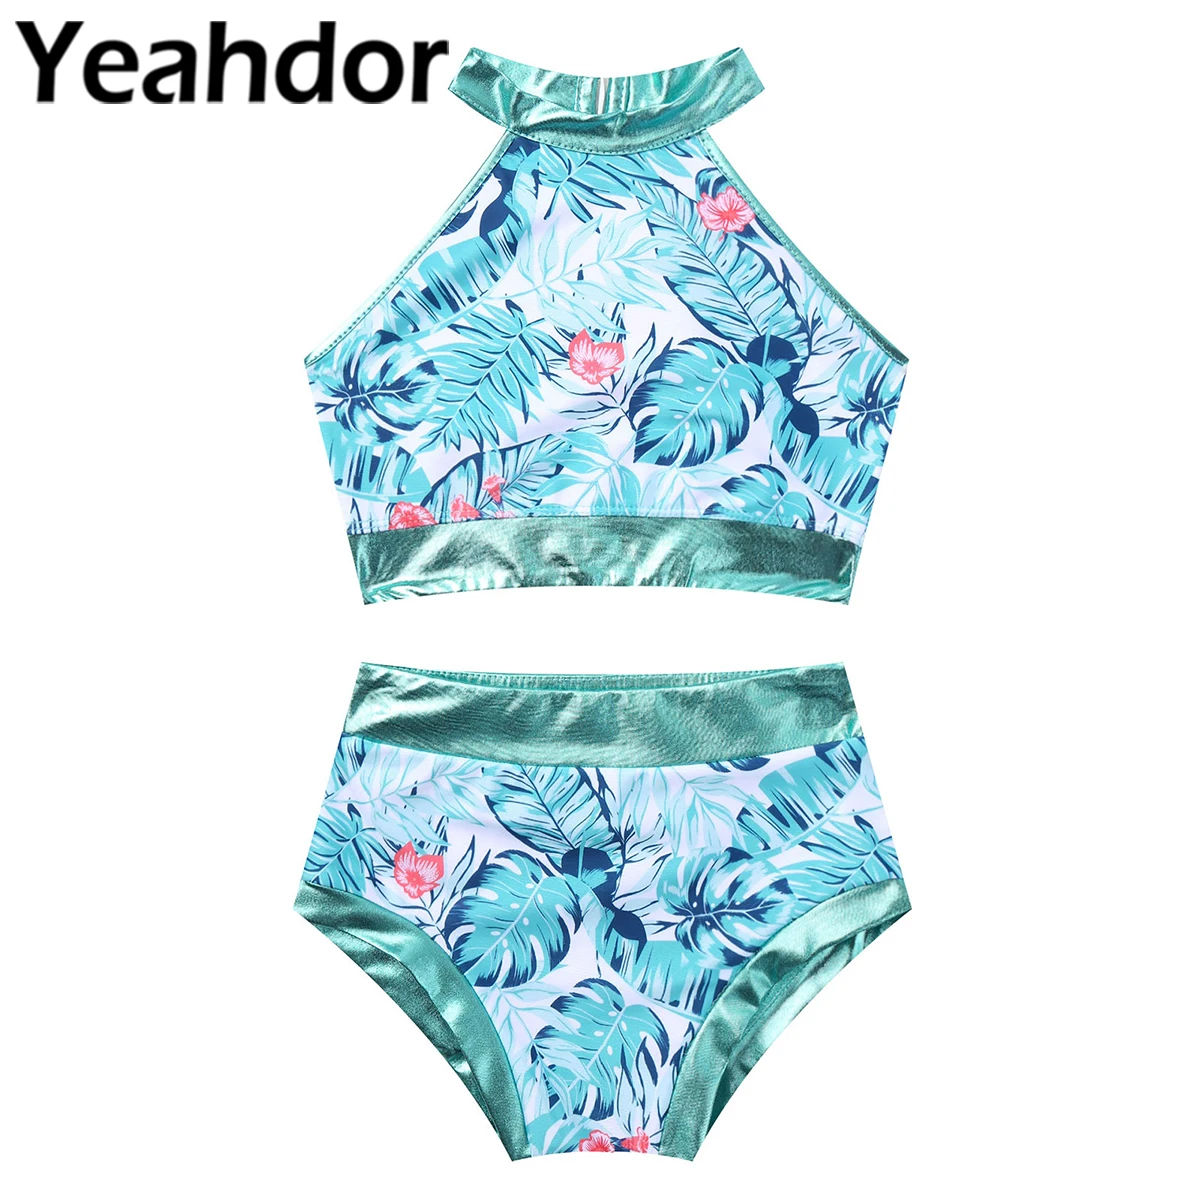 

Summer 2PCS Kids Girls Swimming Outfit Swimwear Tankini Palm Leaves Print Swimsuit Bathing Suit Bikini Top with Bottoms Set